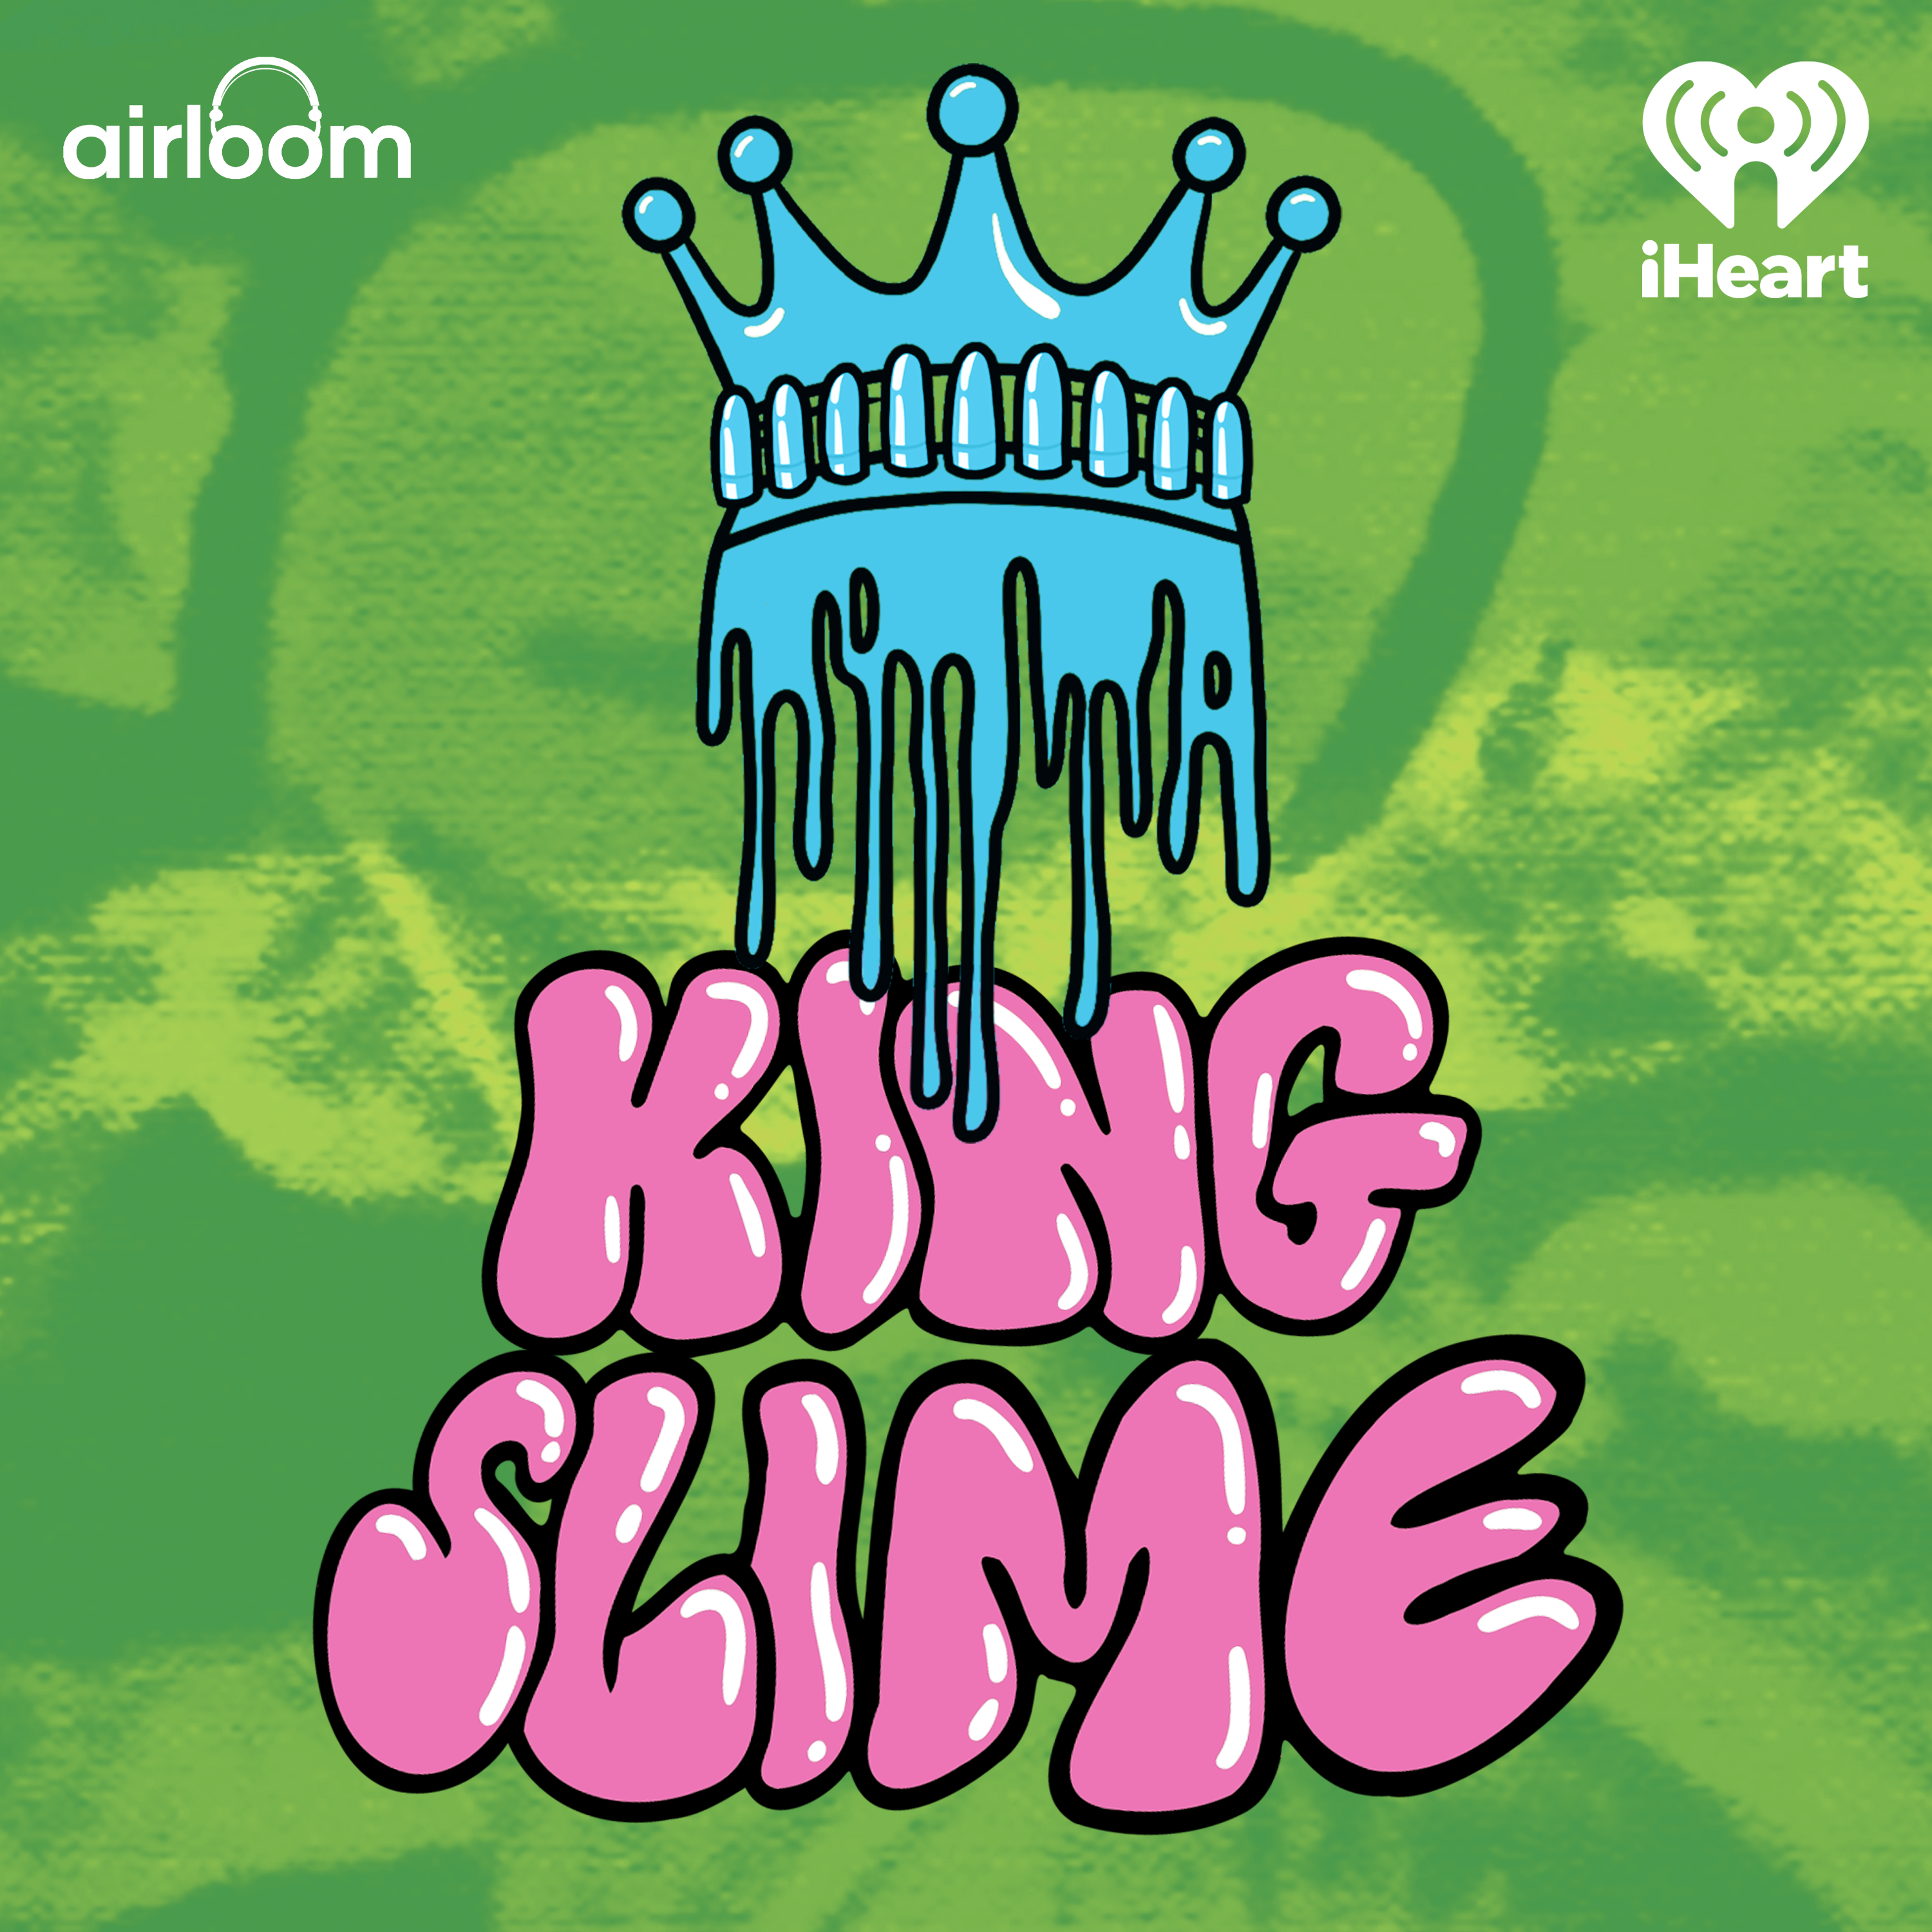 Introducing: King Slime